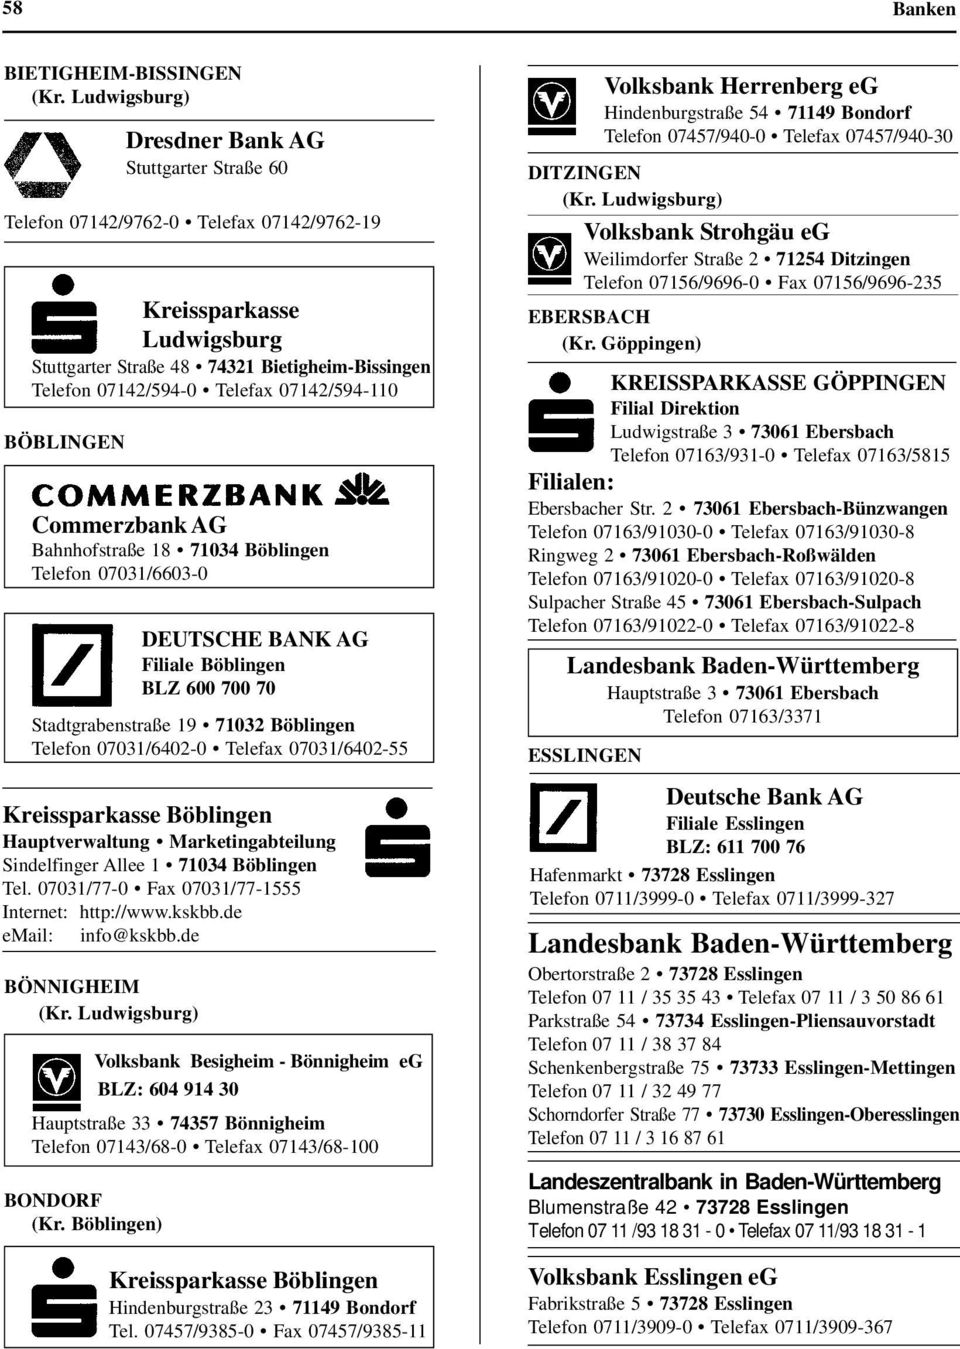 Hauptverwaltung Marketingabteilung Sindelfinger Allee 1 71034 Böblingen Tel. 07031/77-0 Fax 07031/77-1555 Internet: http://www.kskbb.de email: info@kskbb.